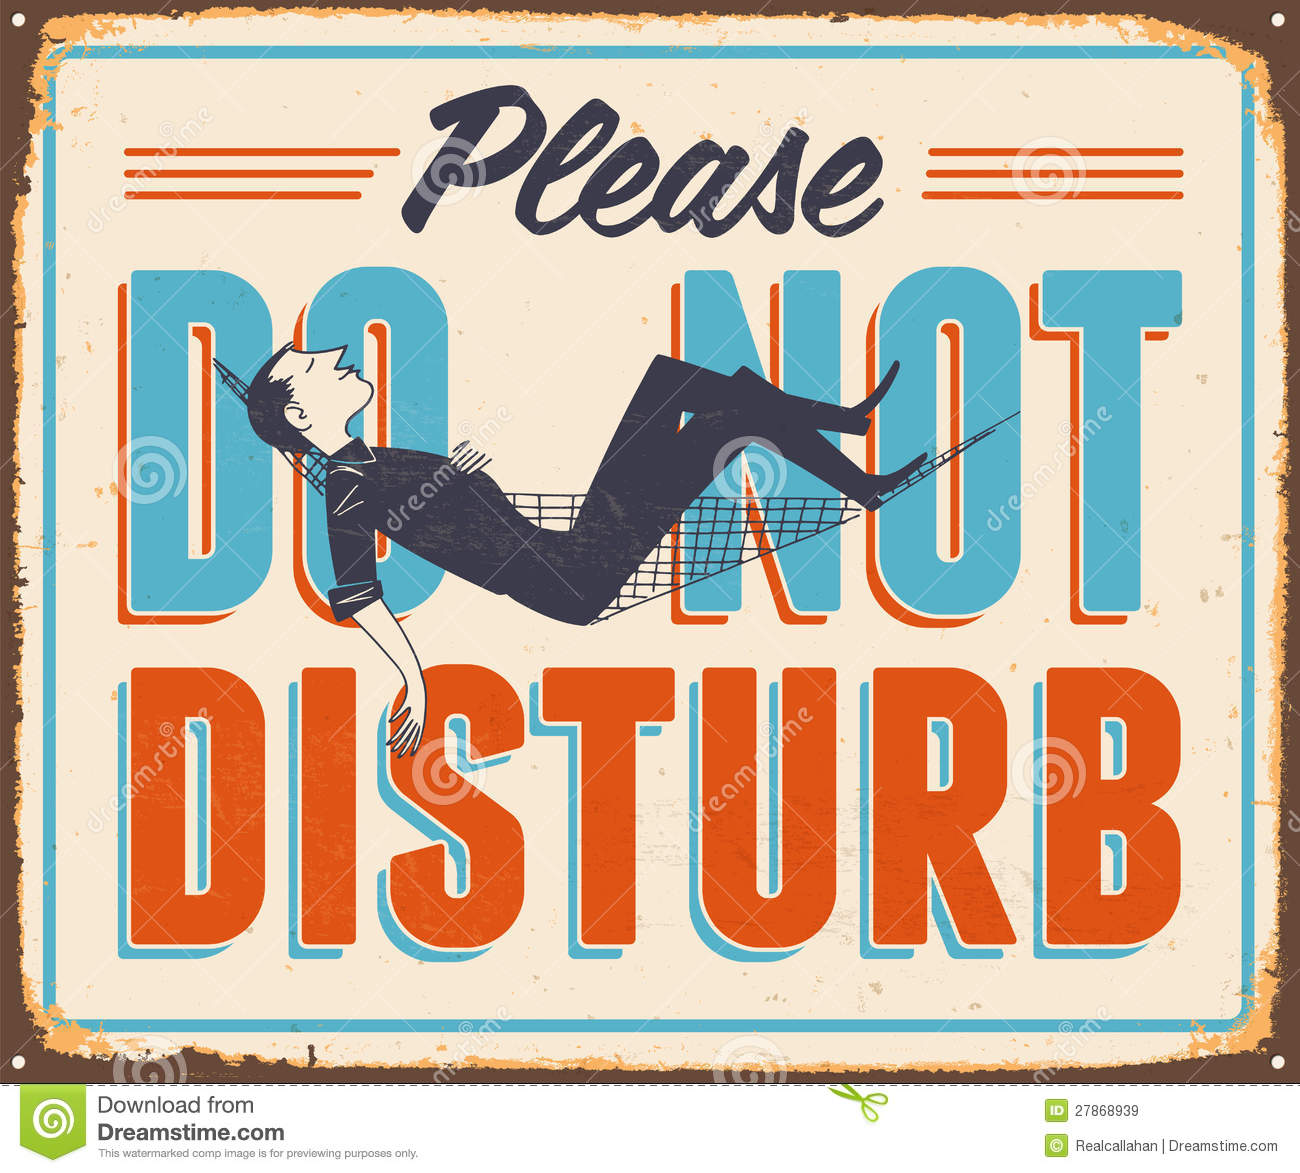 Please Do Not Disturb Sign